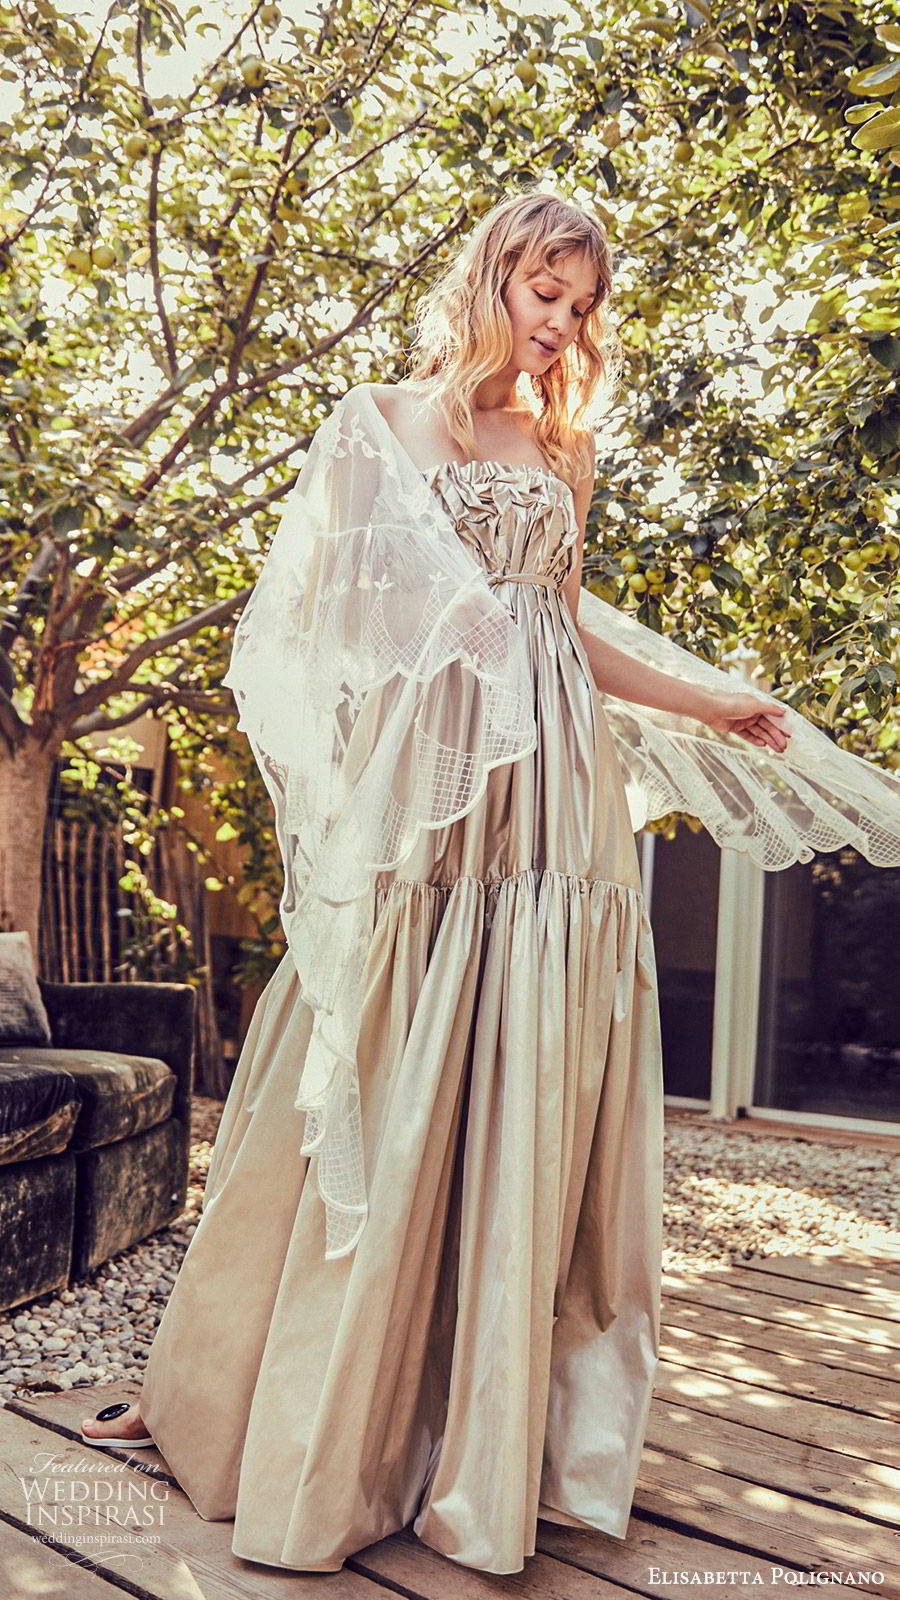 elisabetta polignano 2019 bridal strapless straight across neckline empire waist a line ball gown wedding dress (10) modern chic metallic veil mv